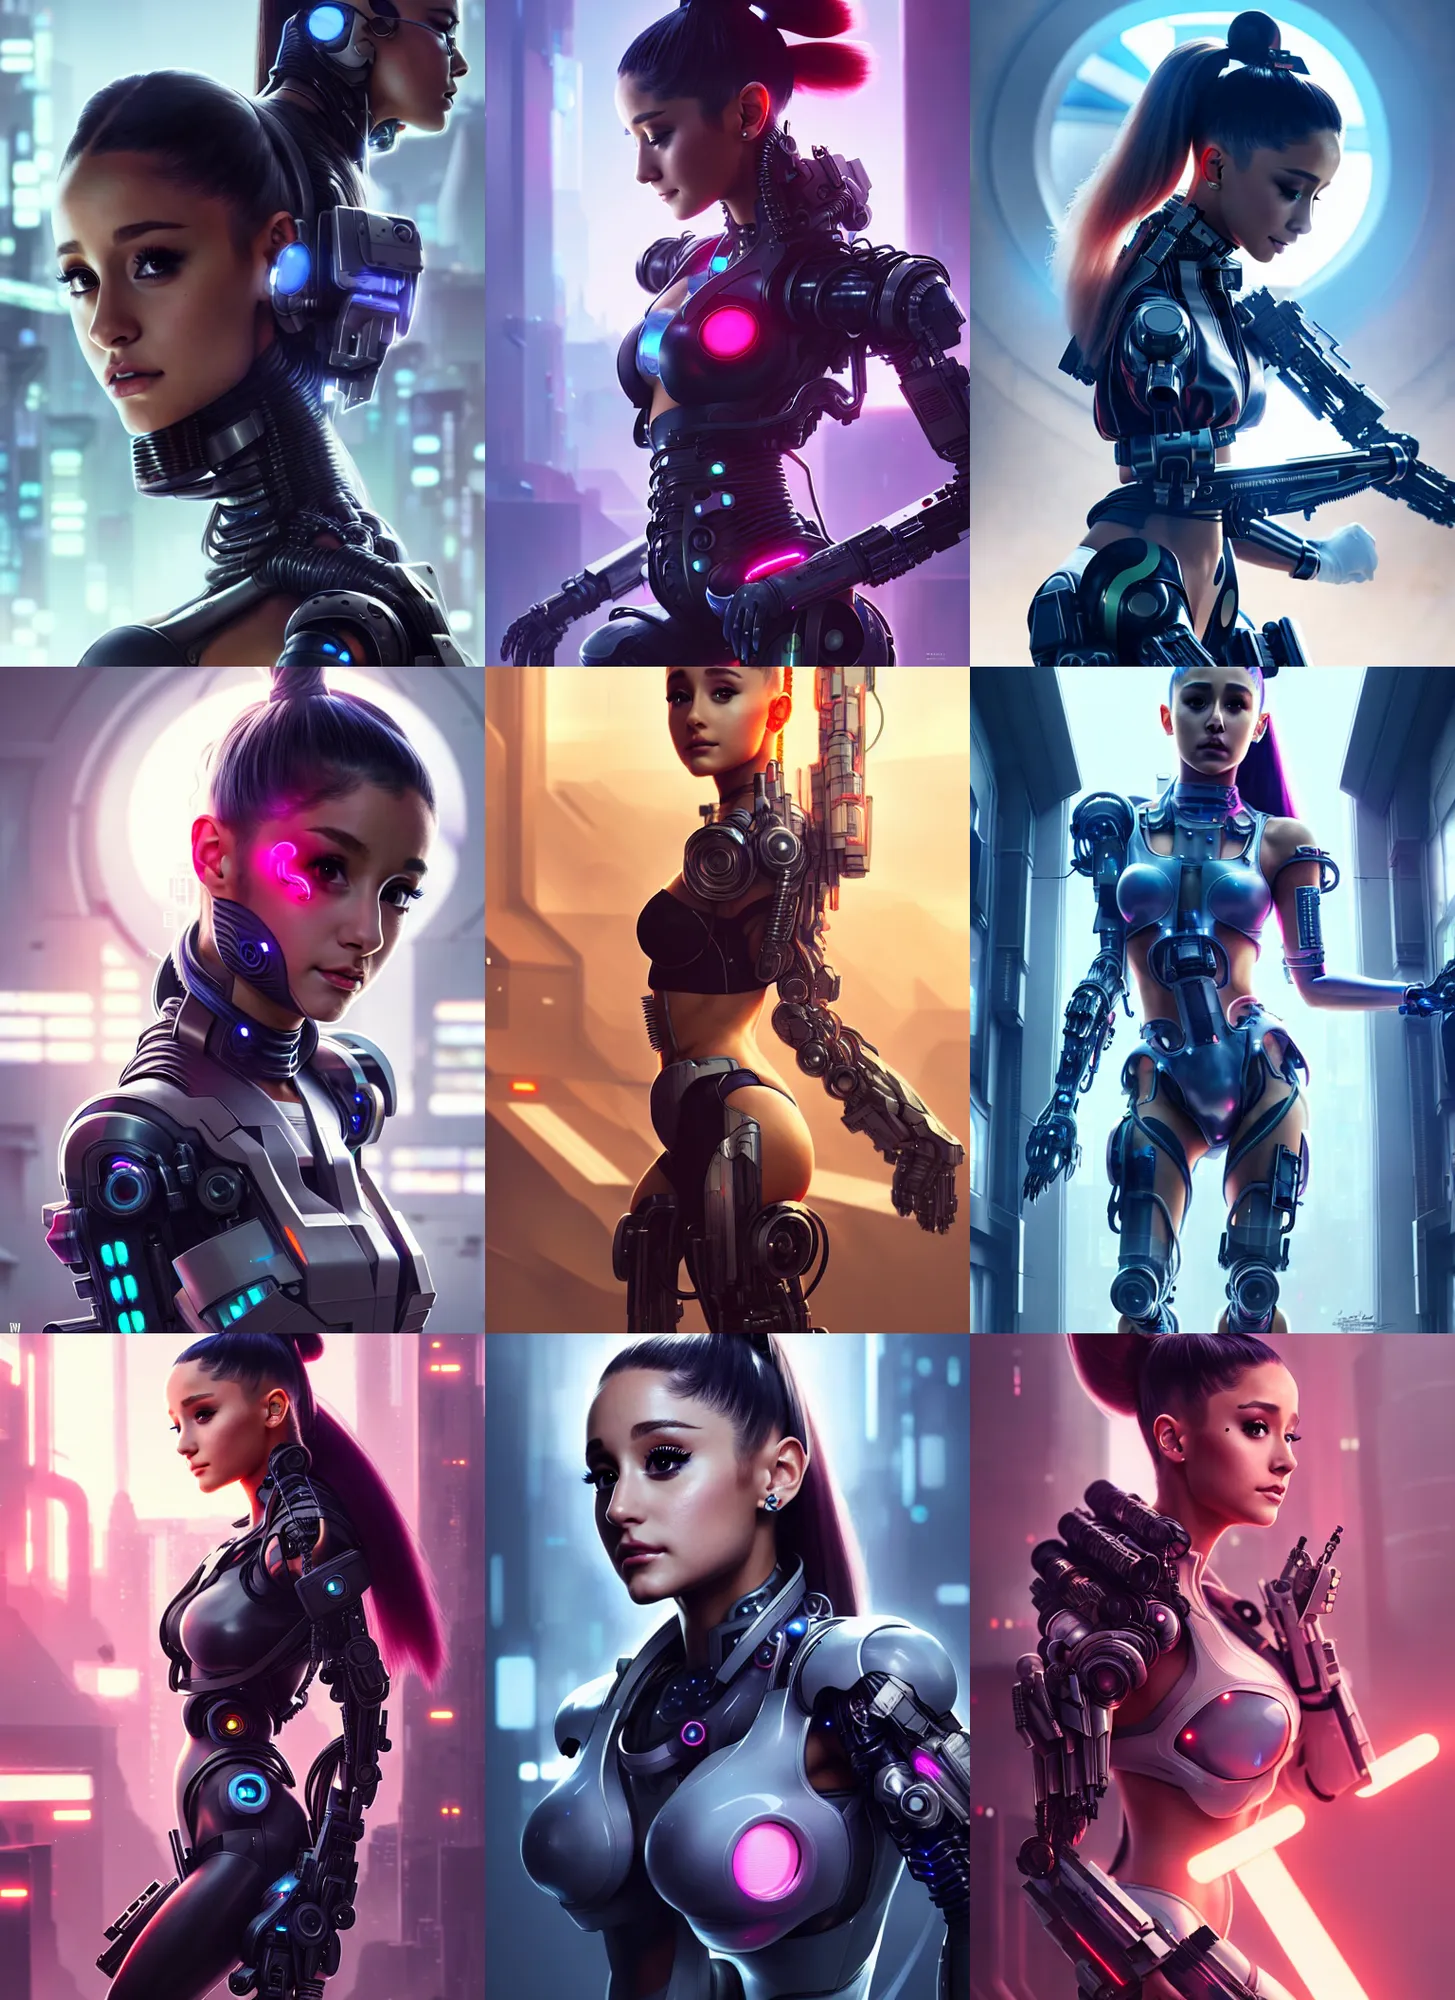 Prompt: ariana grande as a weaponized cyborg, cyberpunk, intricate wirings, highly detailed, sci - fi, octane render, 8 k, sharp focus, smooth, beautiful and graceful, art by artgerm, greg rutkowski, tian zi, soey milk,